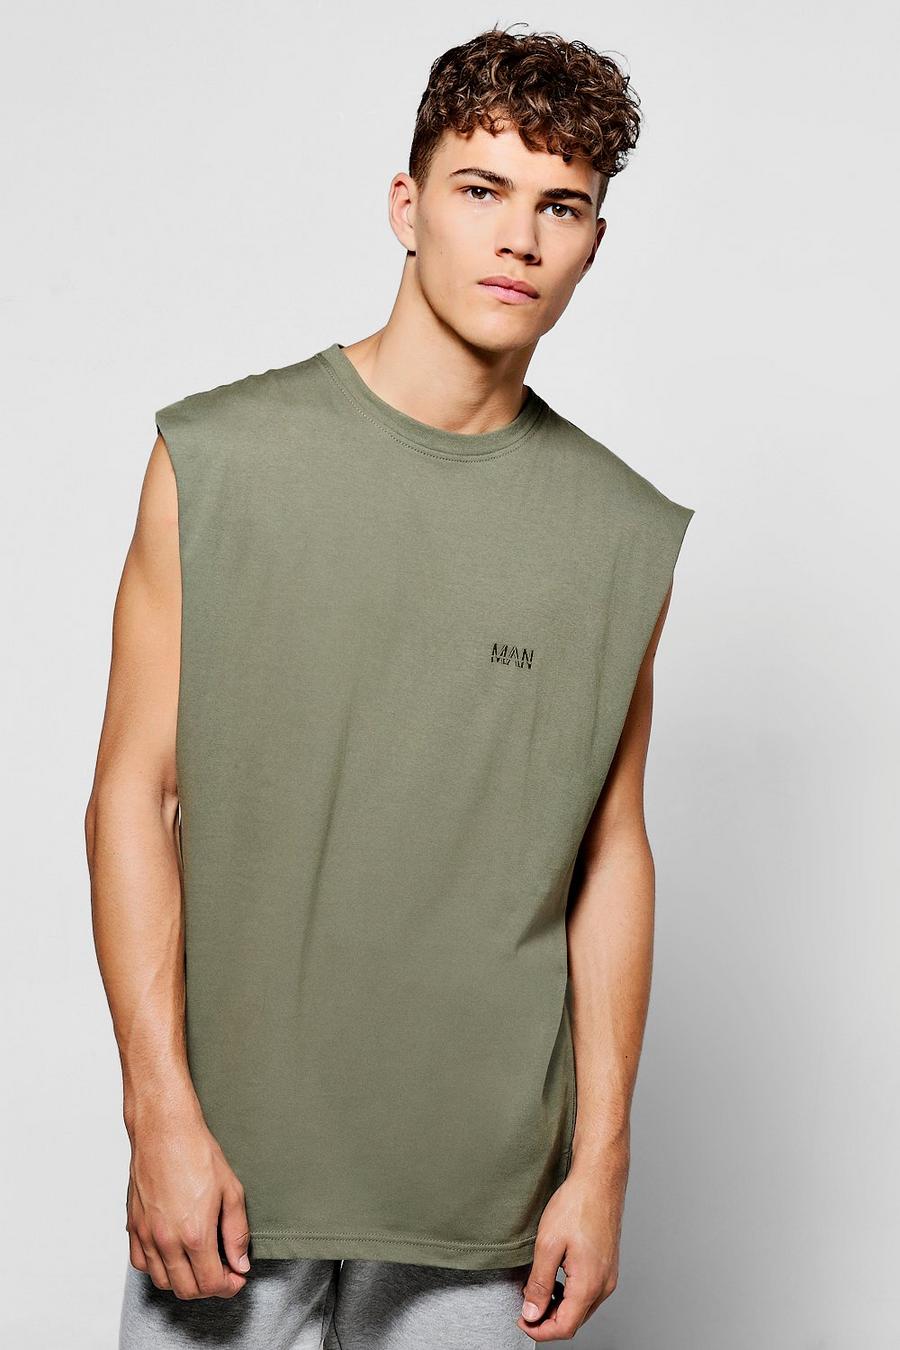 Übergroßes, ärmelloses T-Shirt mit Man-Print, Khakifarben image number 1